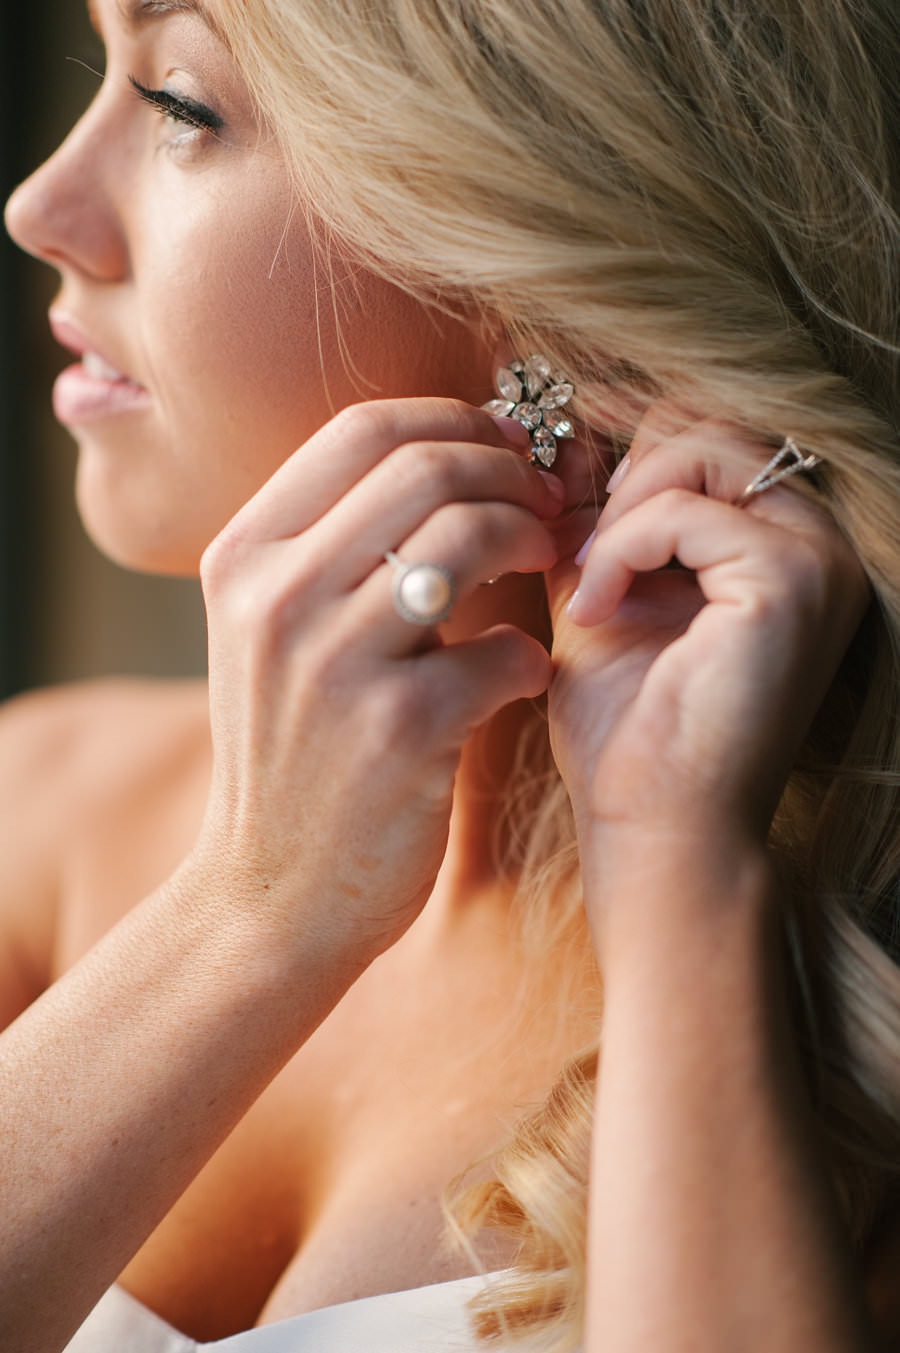 Bride Getting Ready on Wedding Day | Crystal, Rhinestone Diamond Bridal Earrings Jewelry | Tampa Hair and Makeup Artist Michele Renee The Studio